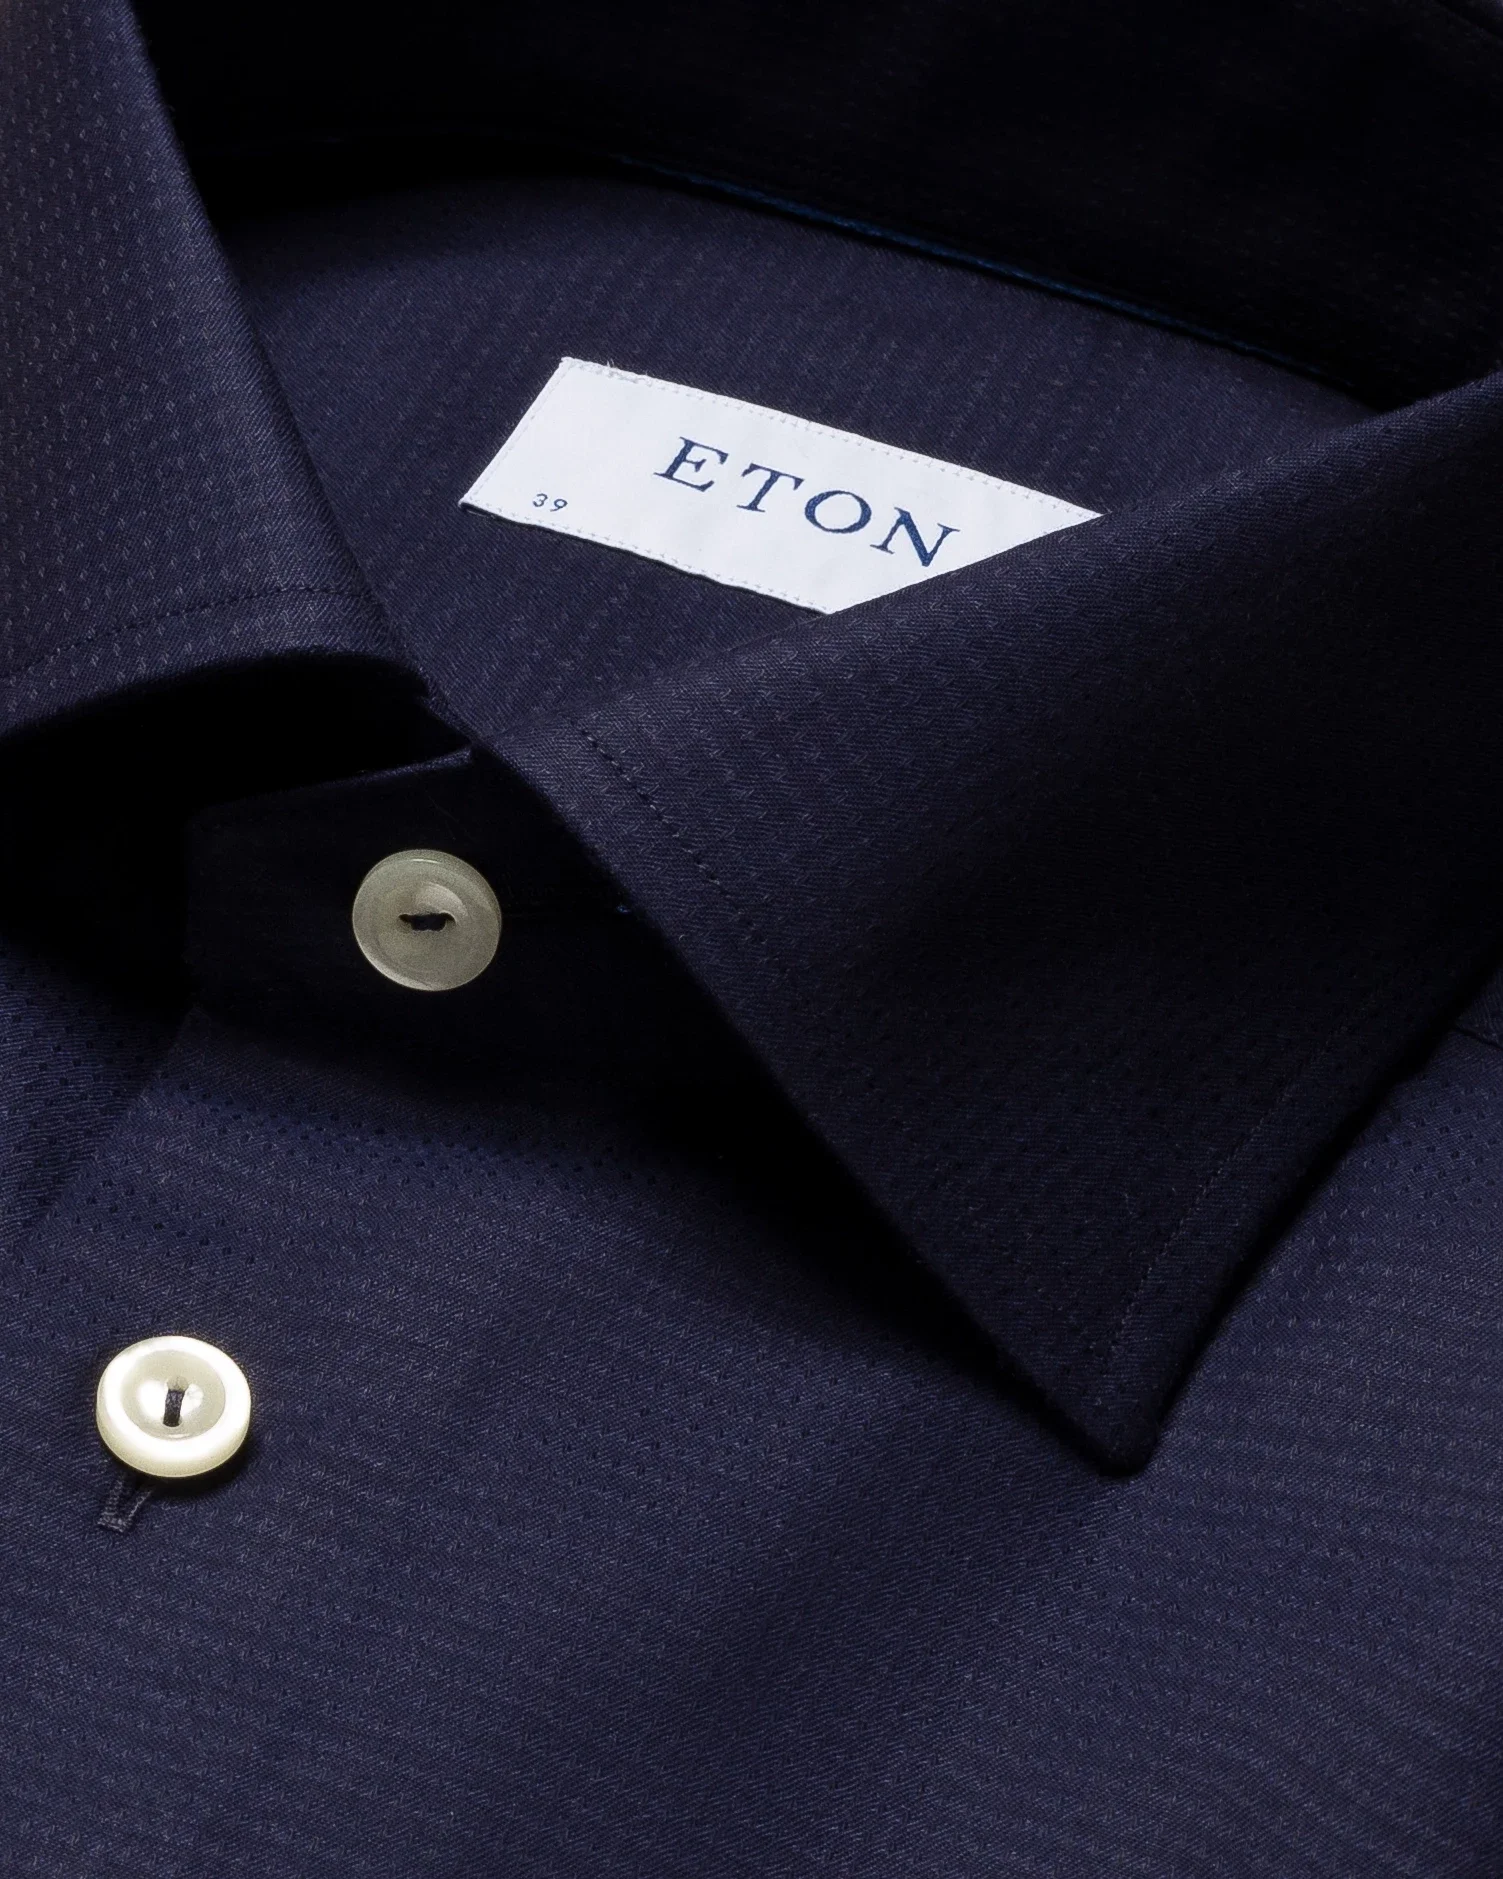 Eton - blue pin dot twill shirt